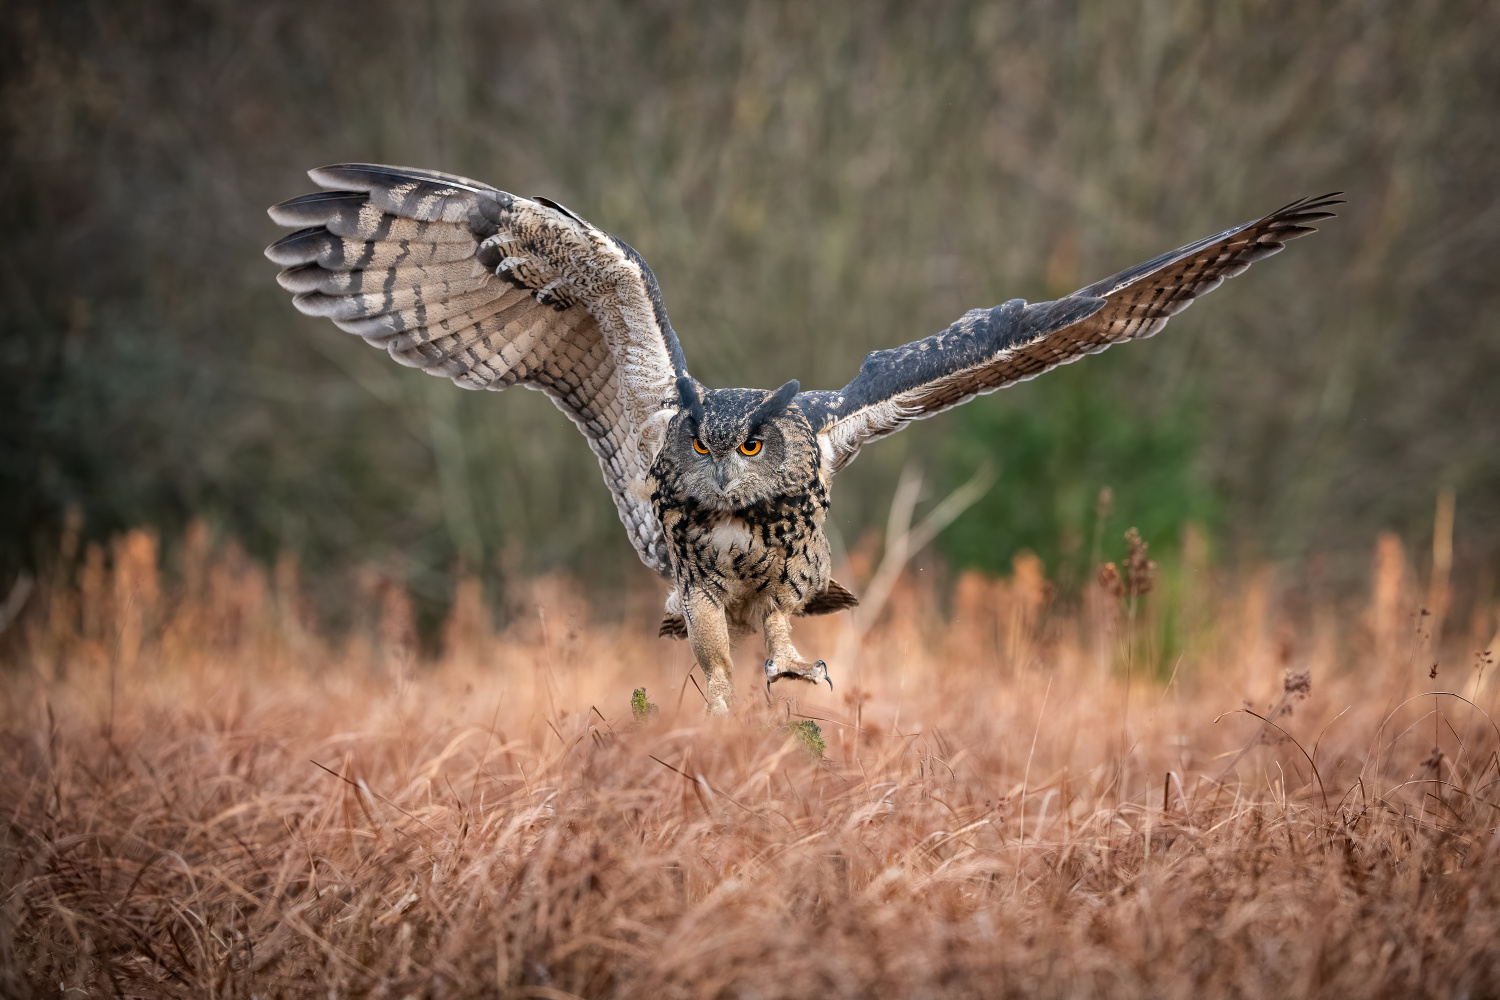 výr velký (Bubo bubo) Eurasian eagle-owl